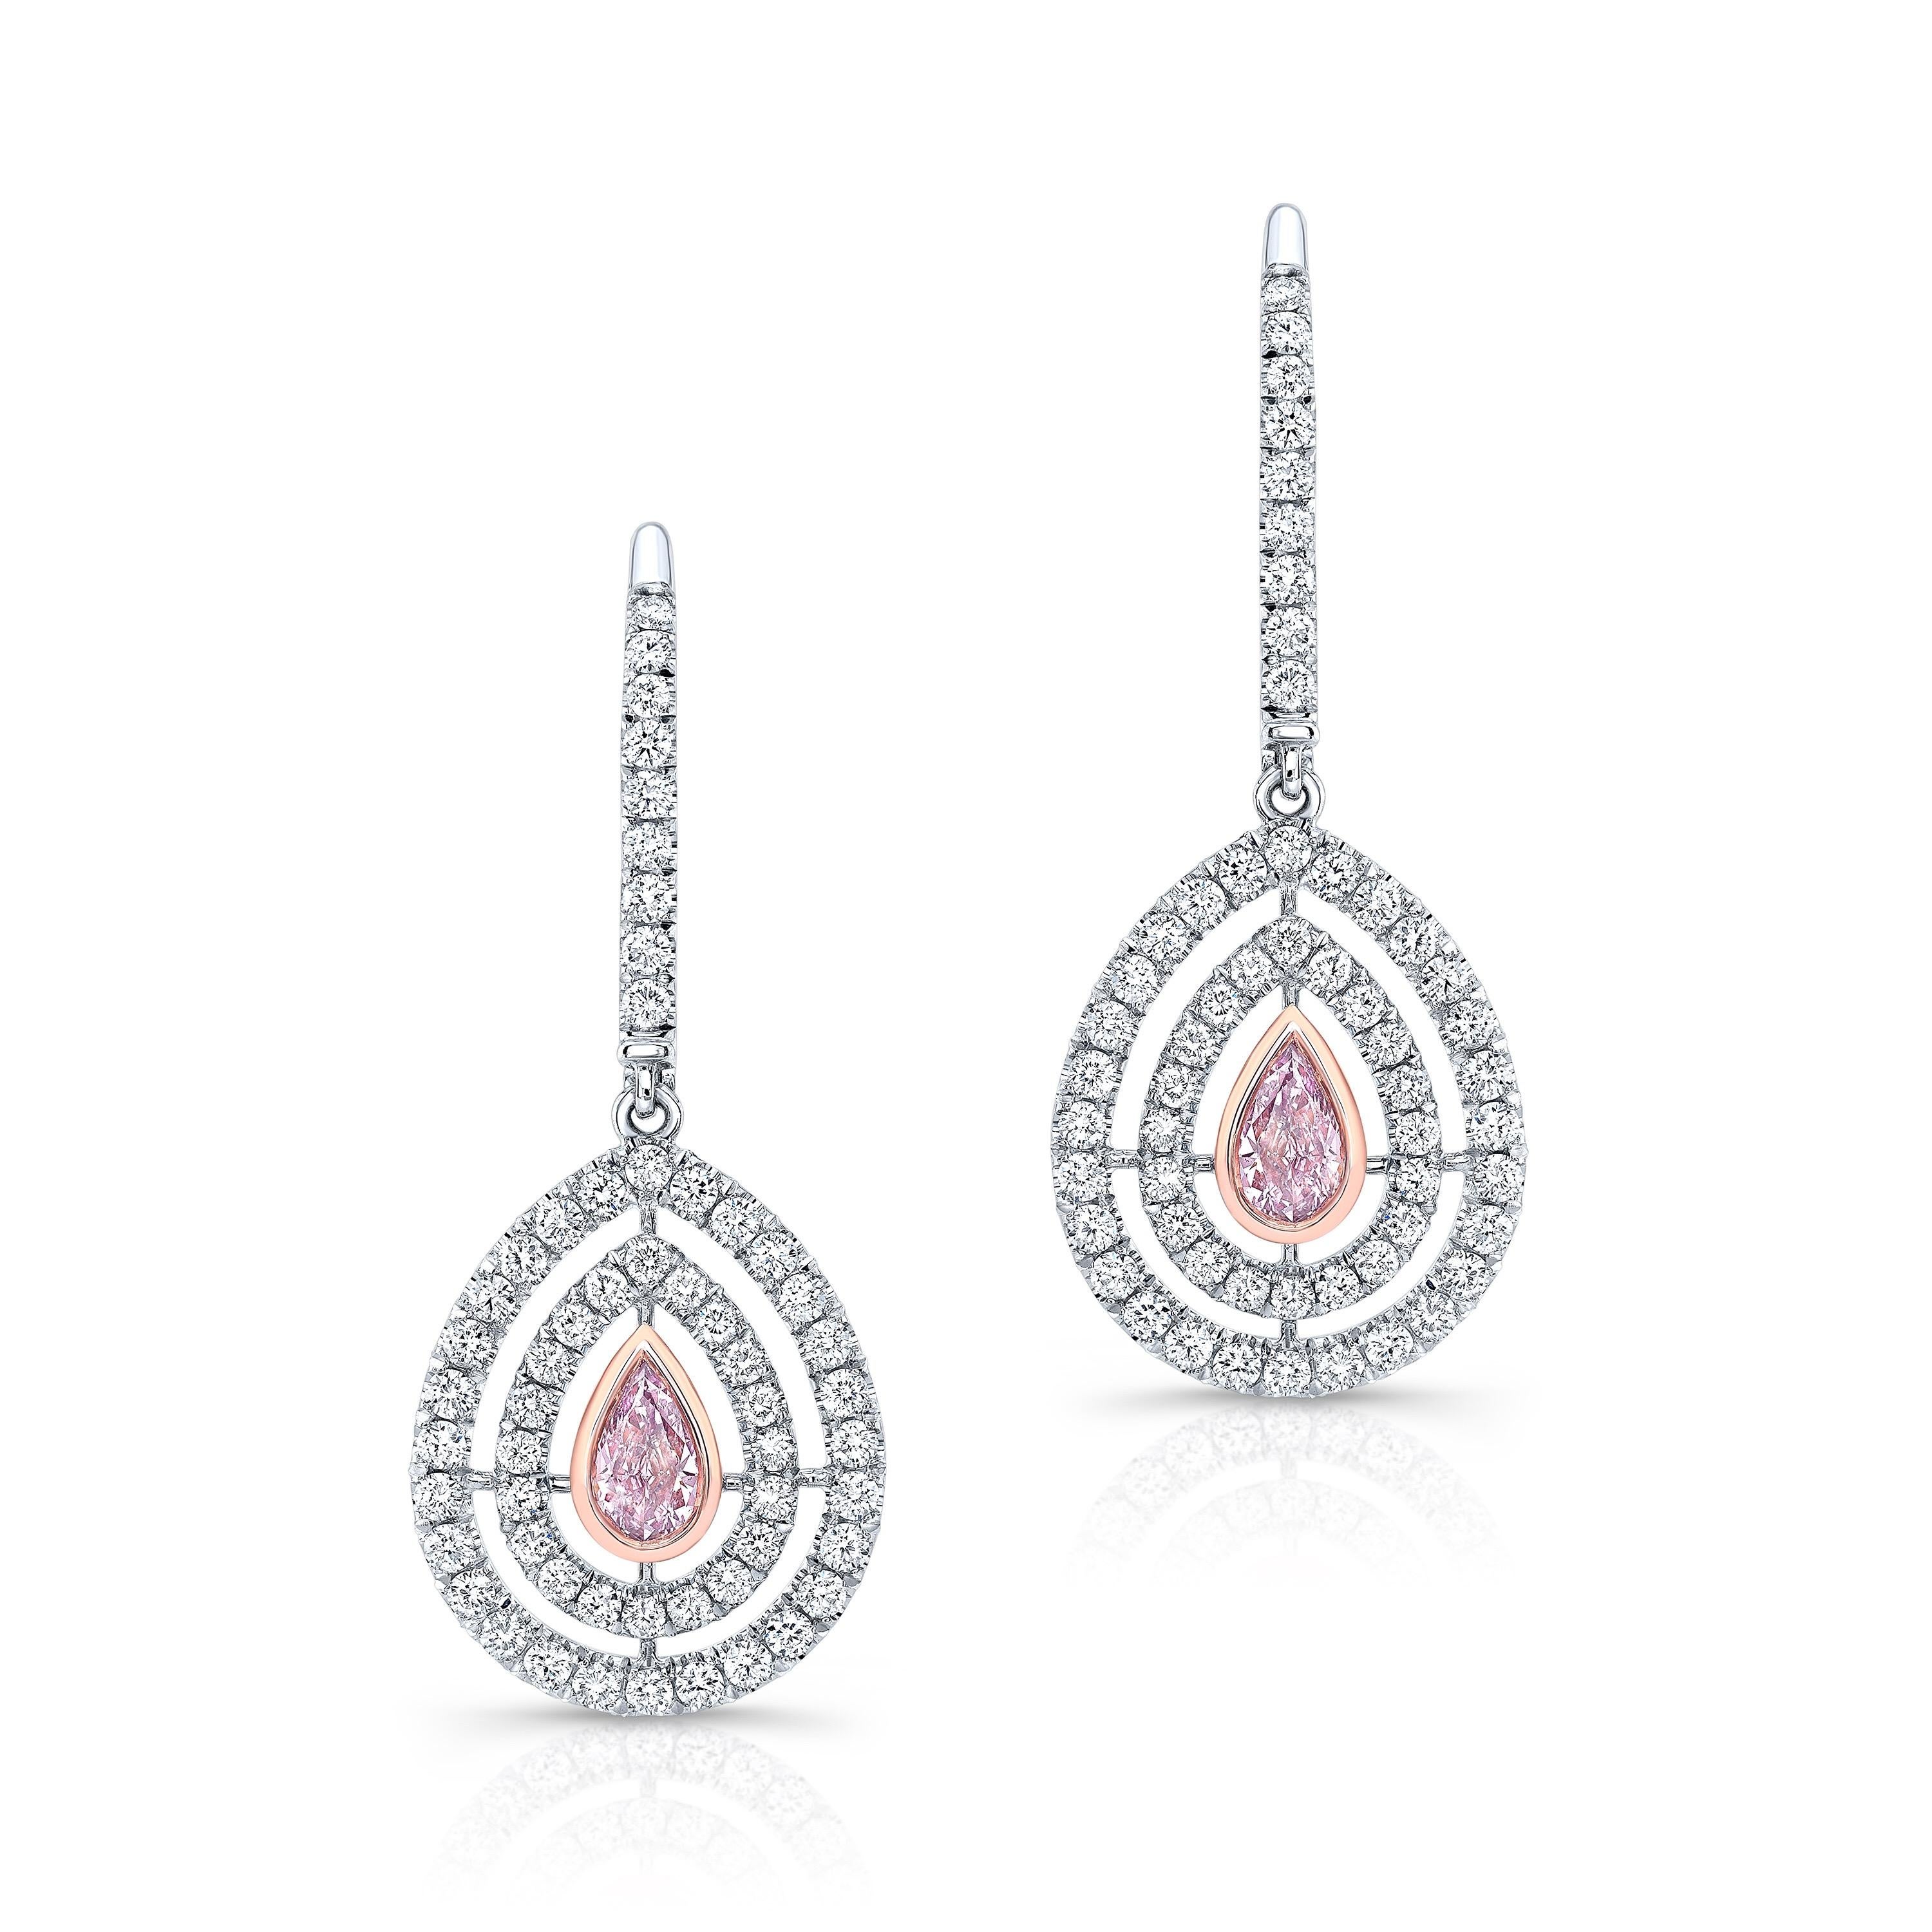 Pear Cut Pink Diamond Earrings 0.46 Carat GIA Certified